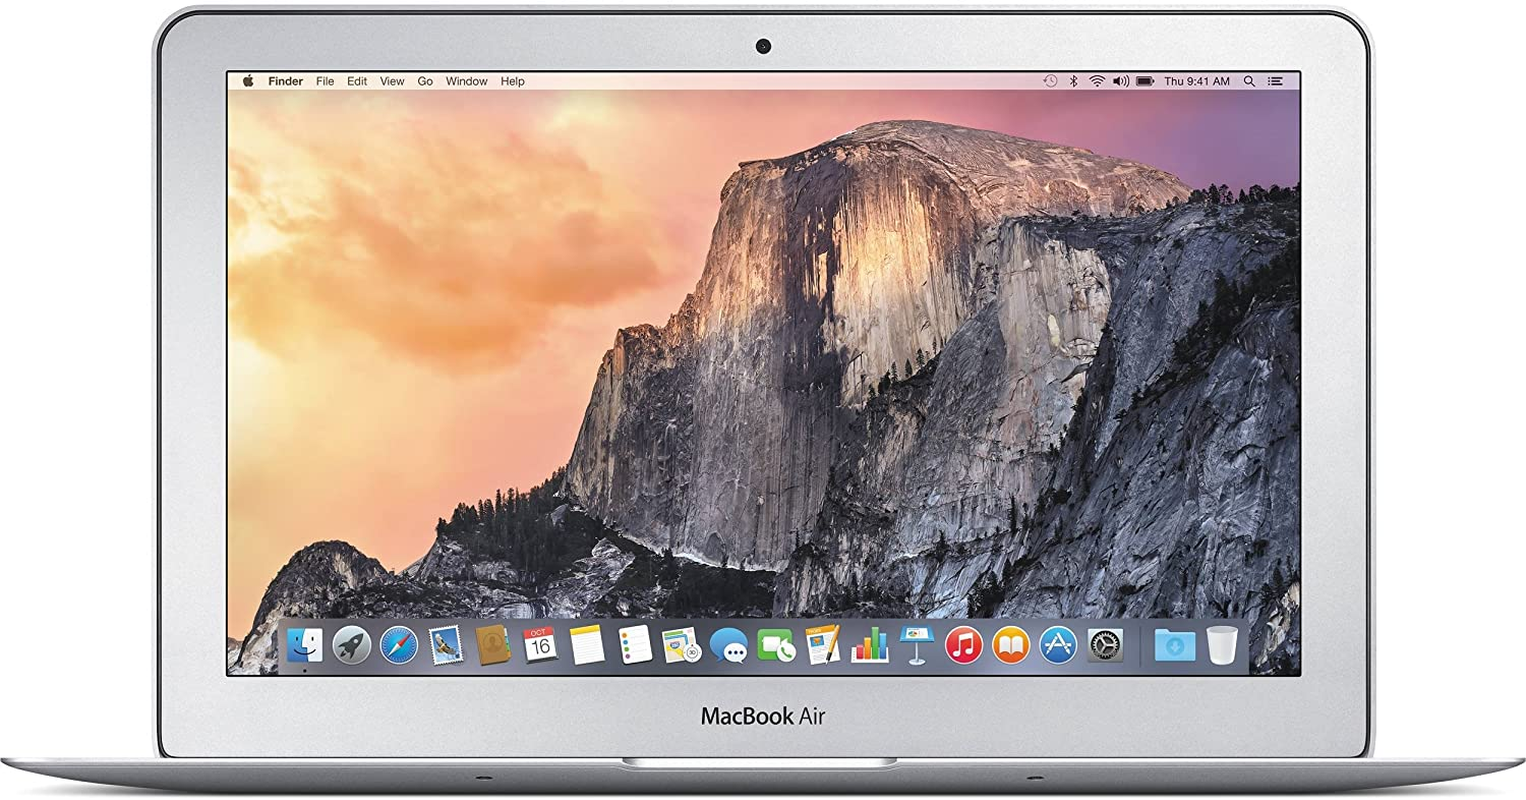 Apple Macbook Air MJVM2LL/A Intel Core I5-5250U X2 1.6Ghz 4GB 120GB, Silver (Refurbished)